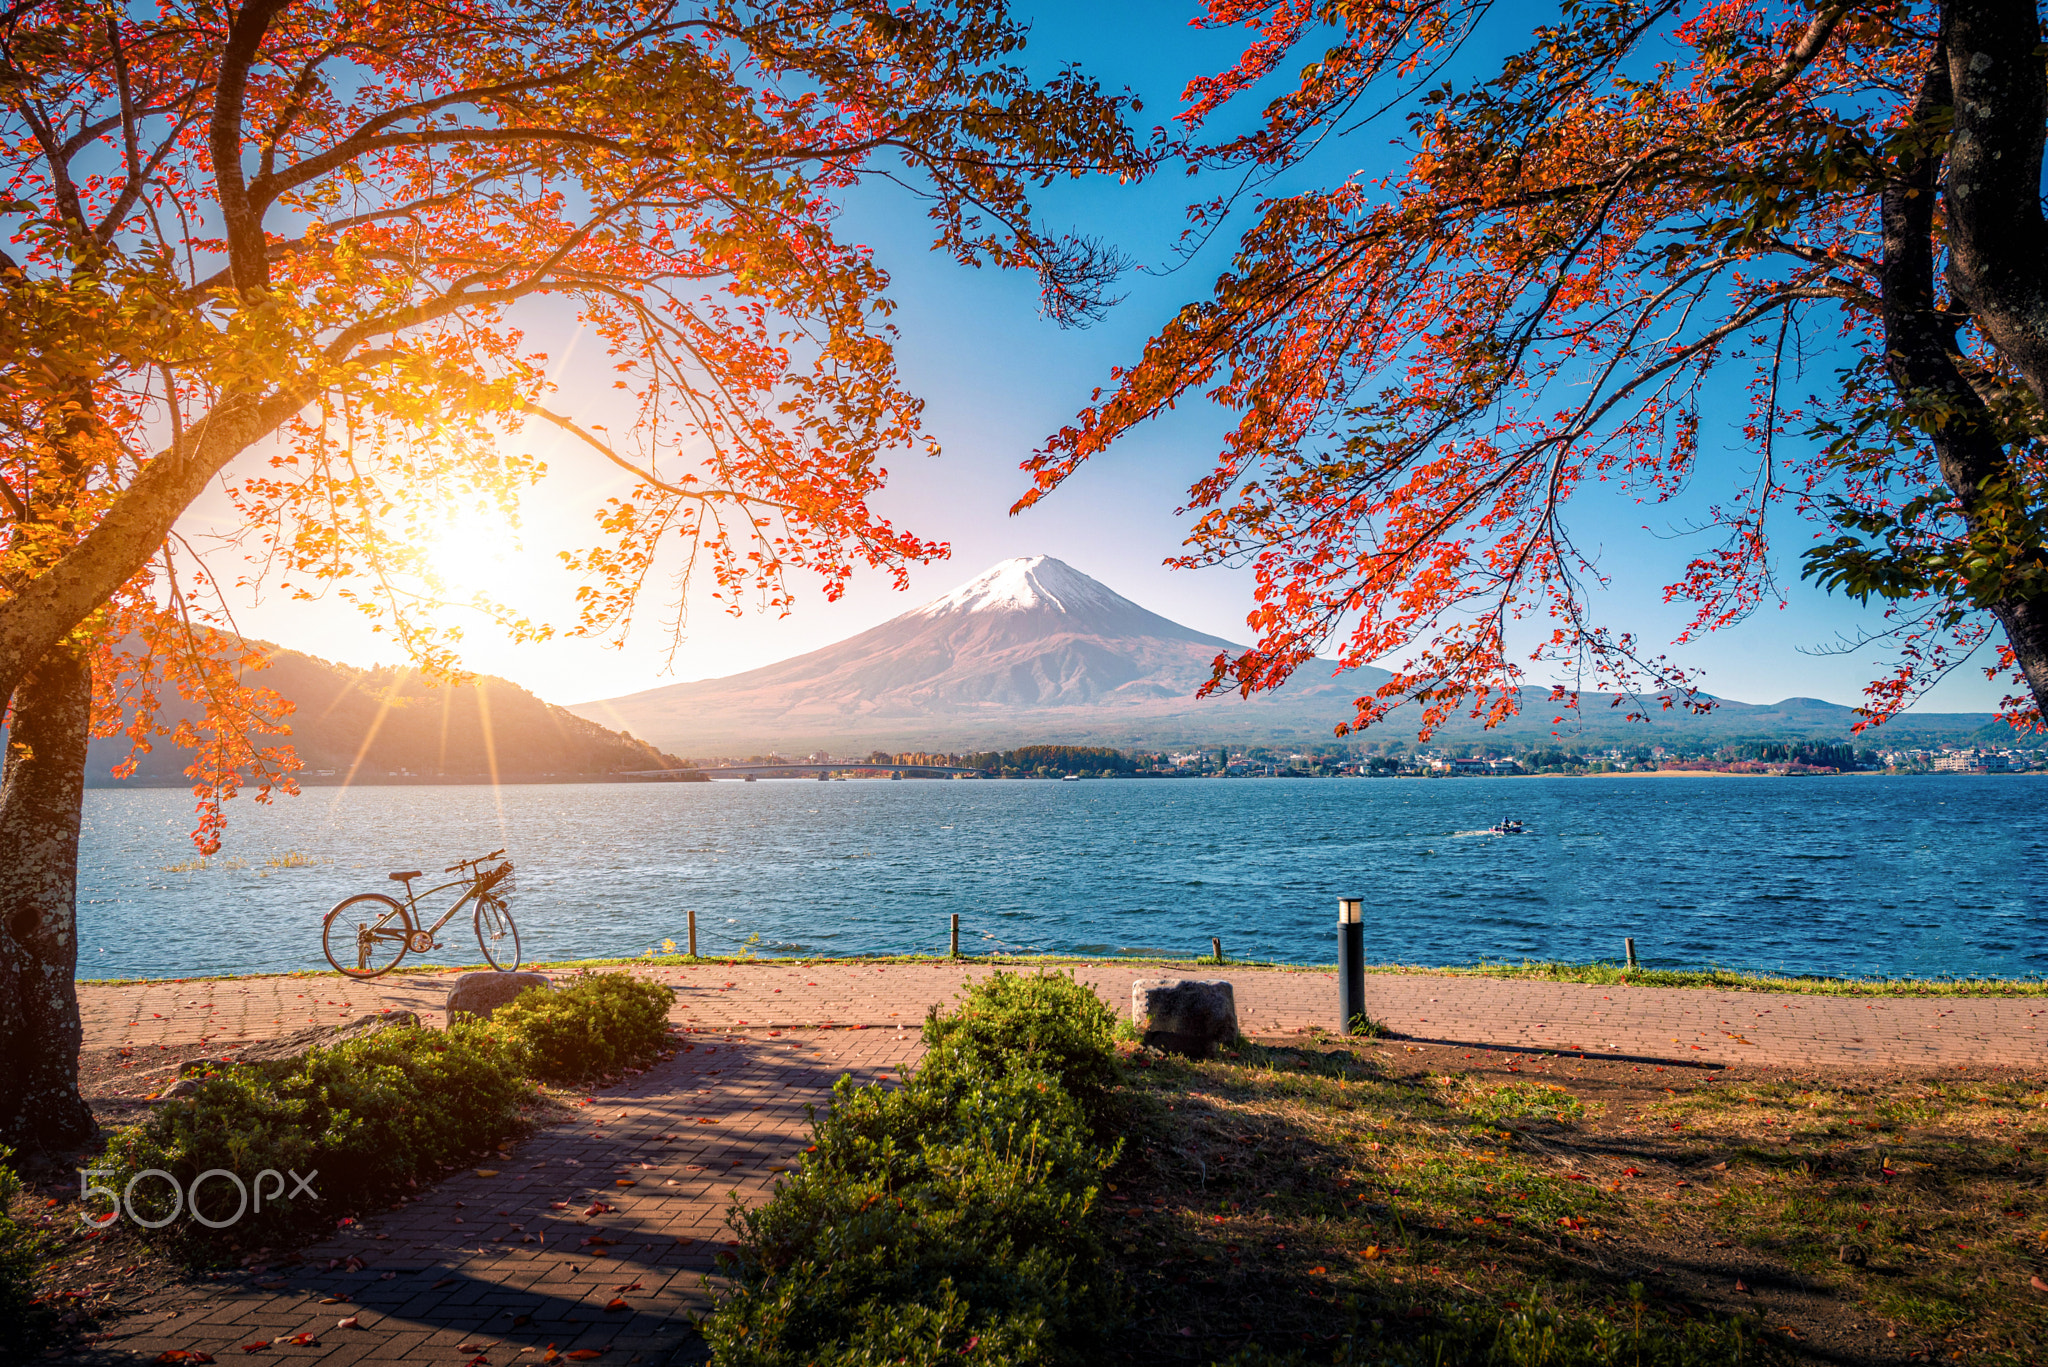 Mt. Fuji over Lake Kawaguchiko with bicycle and autumn foliage a